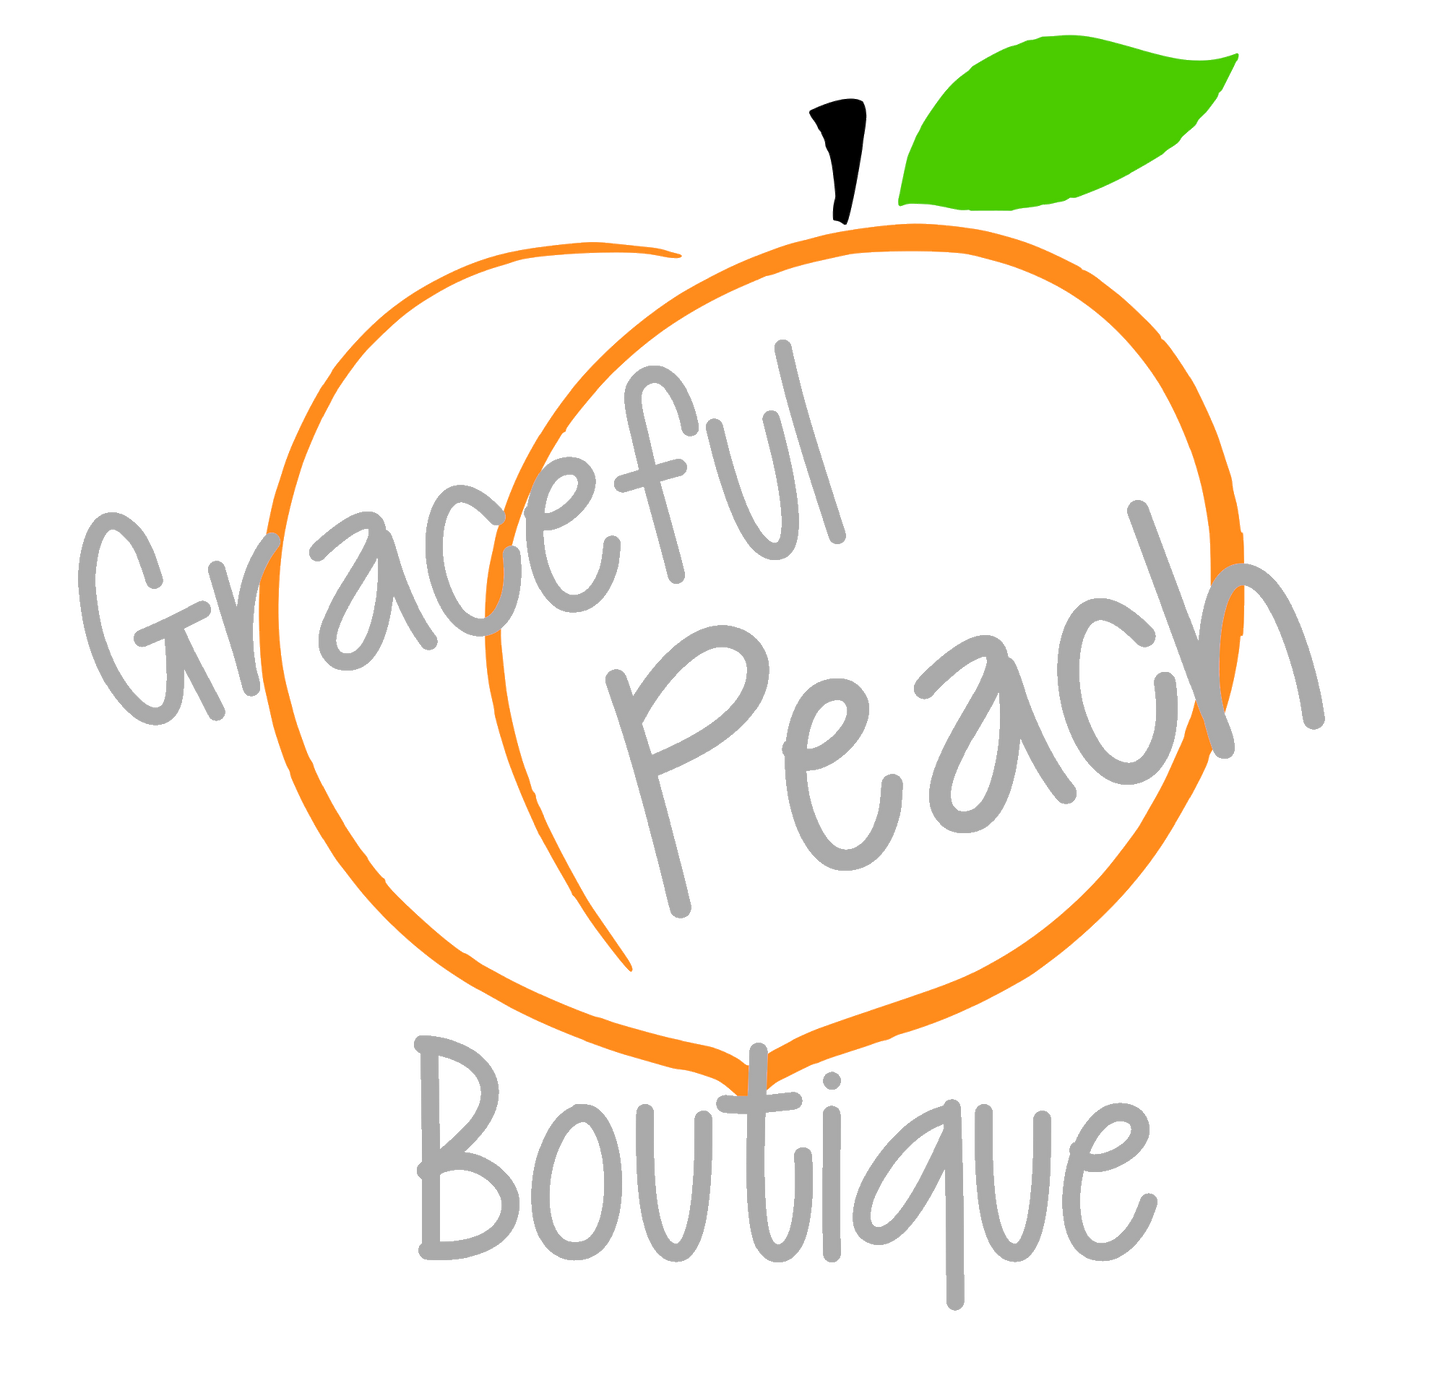 Graceful Peach Boutique Gift Card